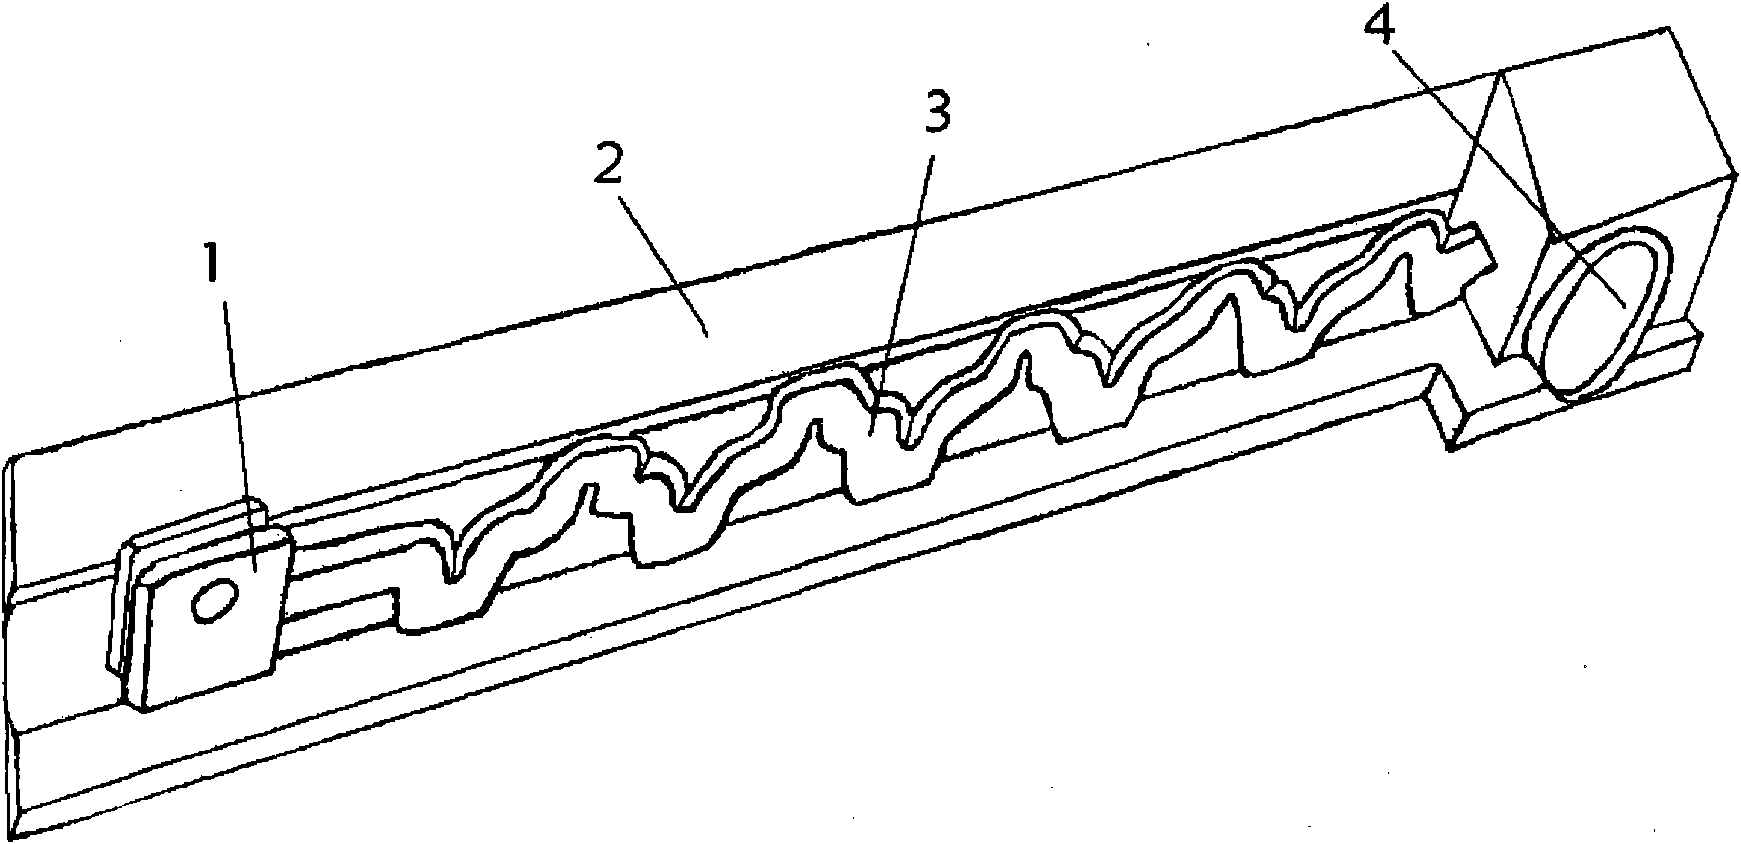 Whole-field testing method for internal flow of drip emitter maze flow channel